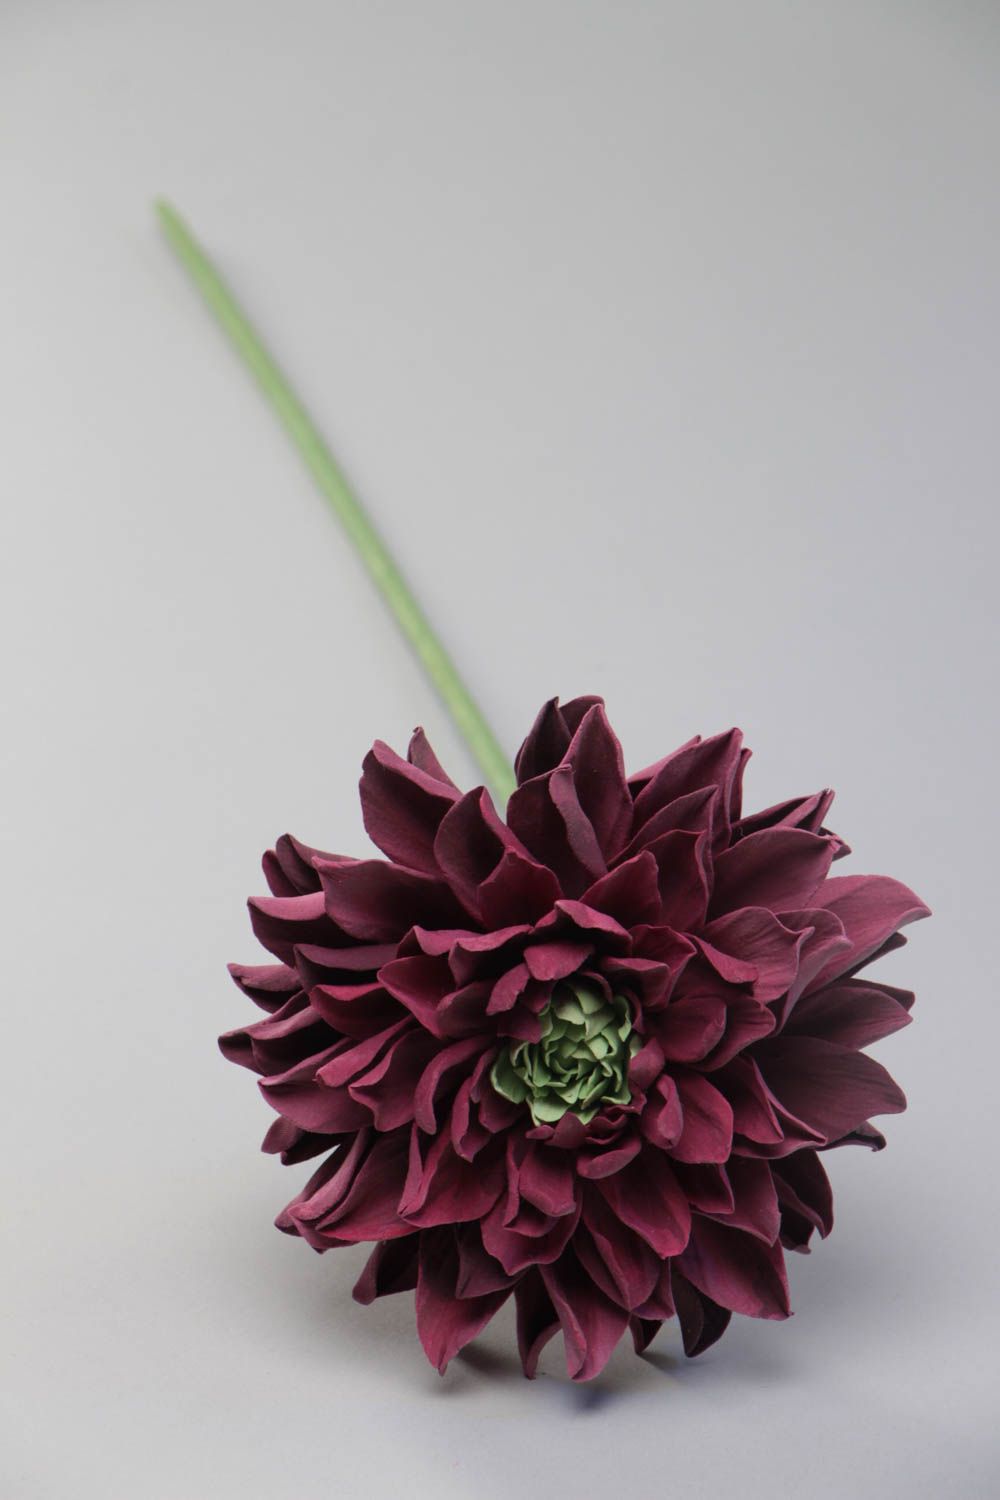 Handmade decorative flower with long stalk Chrysanthemum interior design ideas photo 2